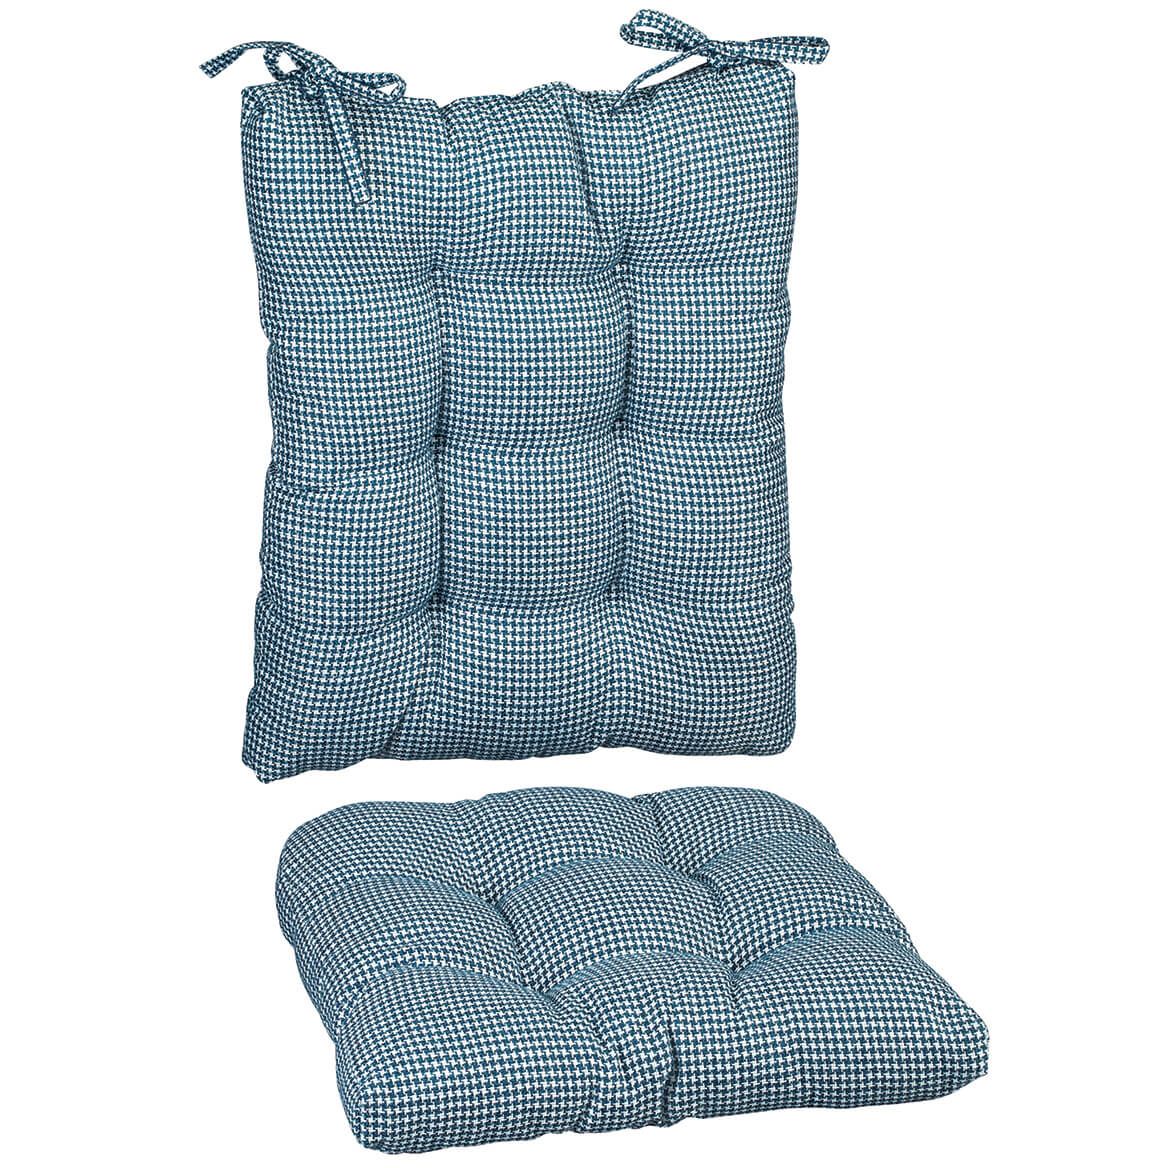 The Harlow Rocker Cushion Set by OakRidge™ + '-' + 372759